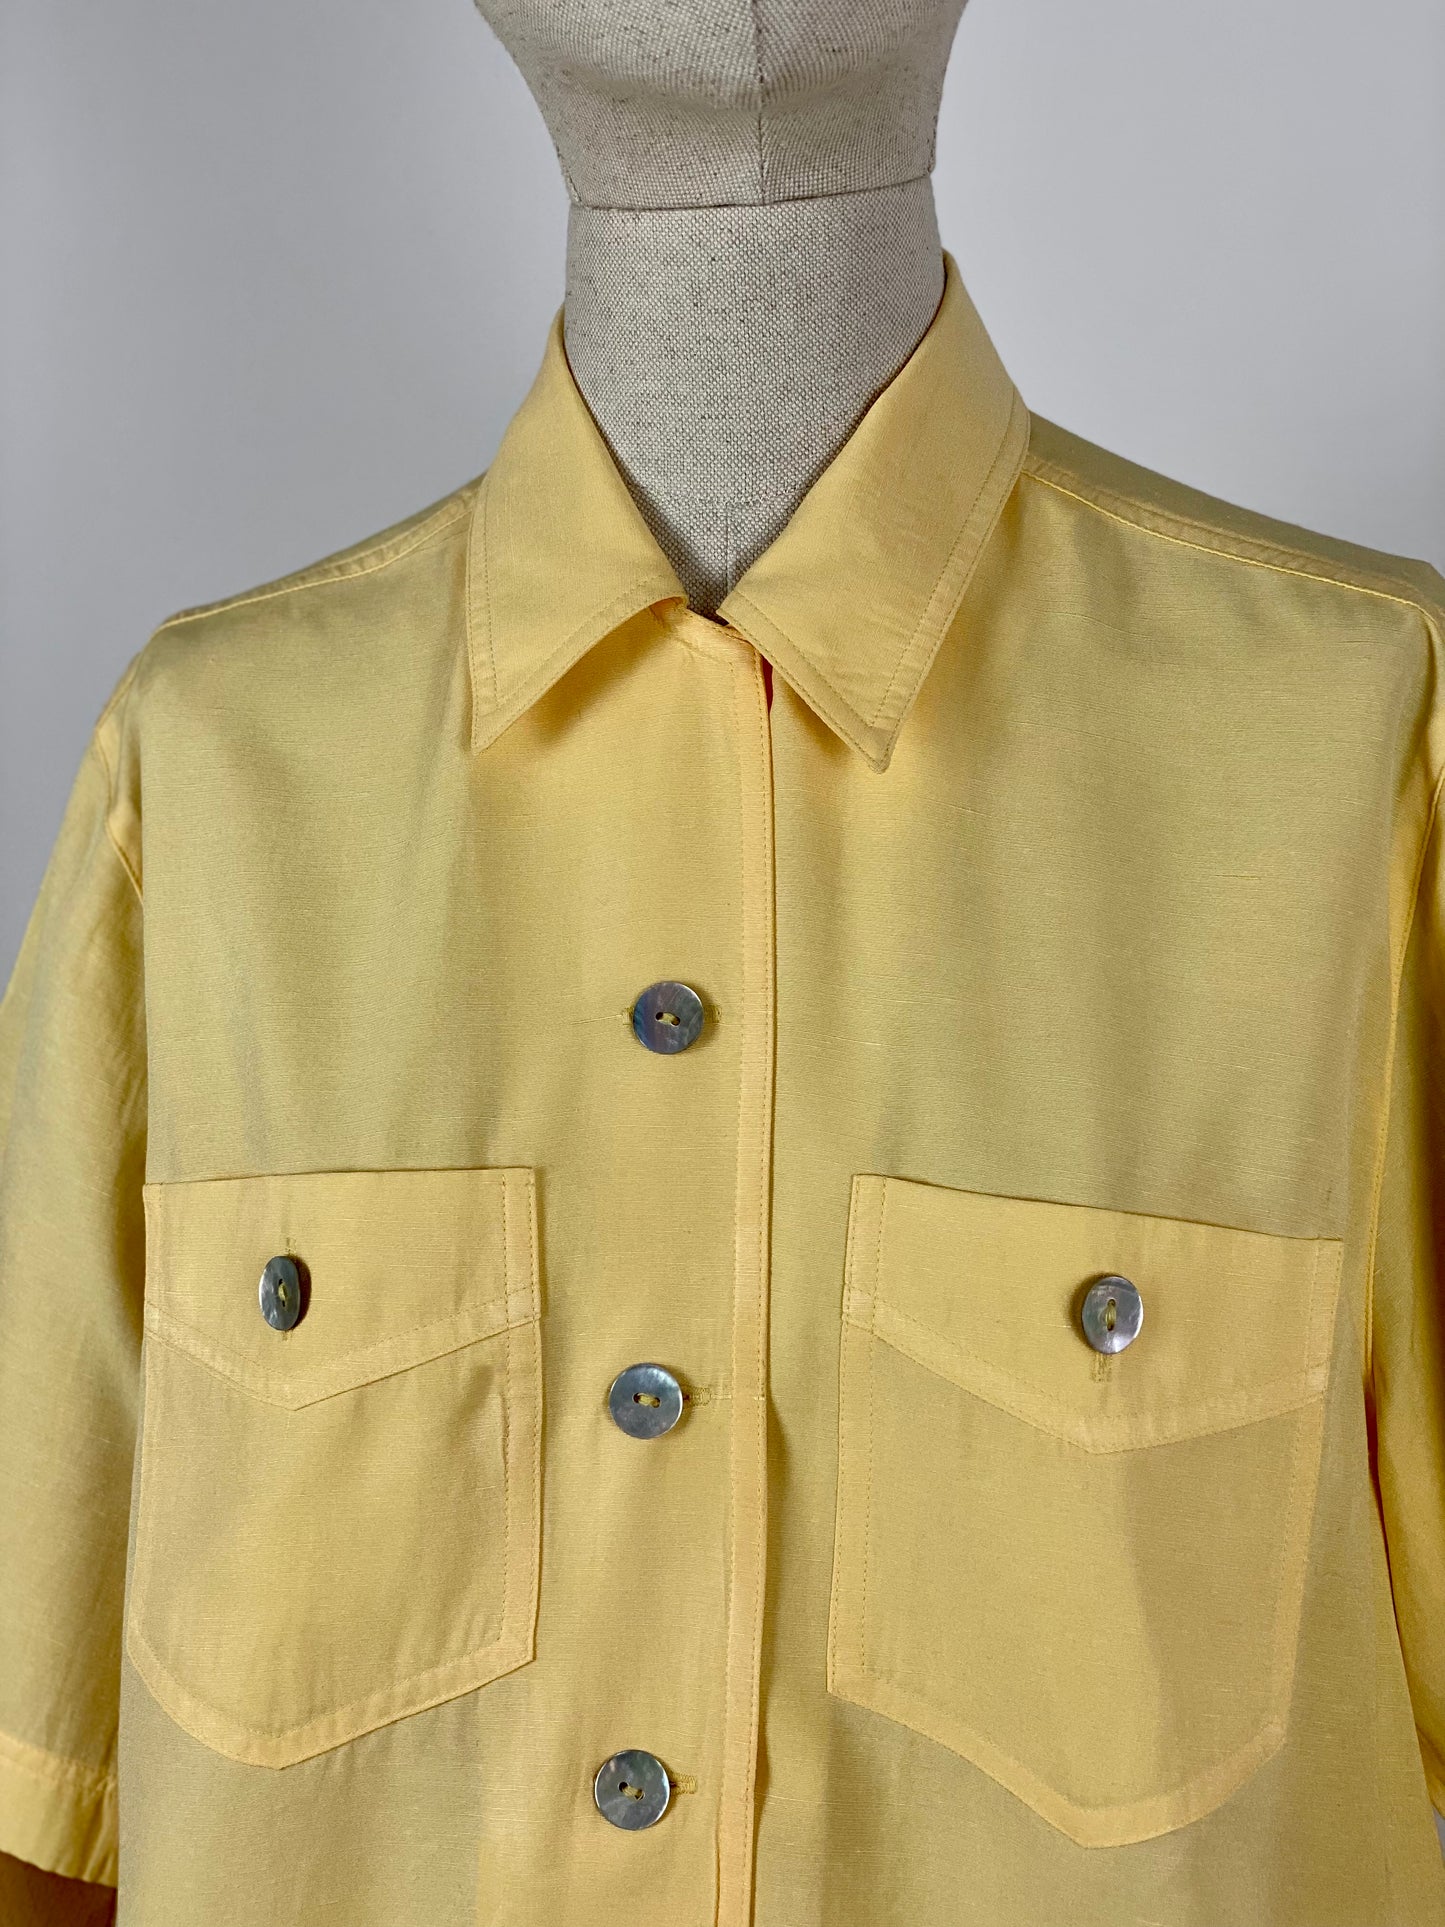 Vintage Yellow Short Sleeved Shirt